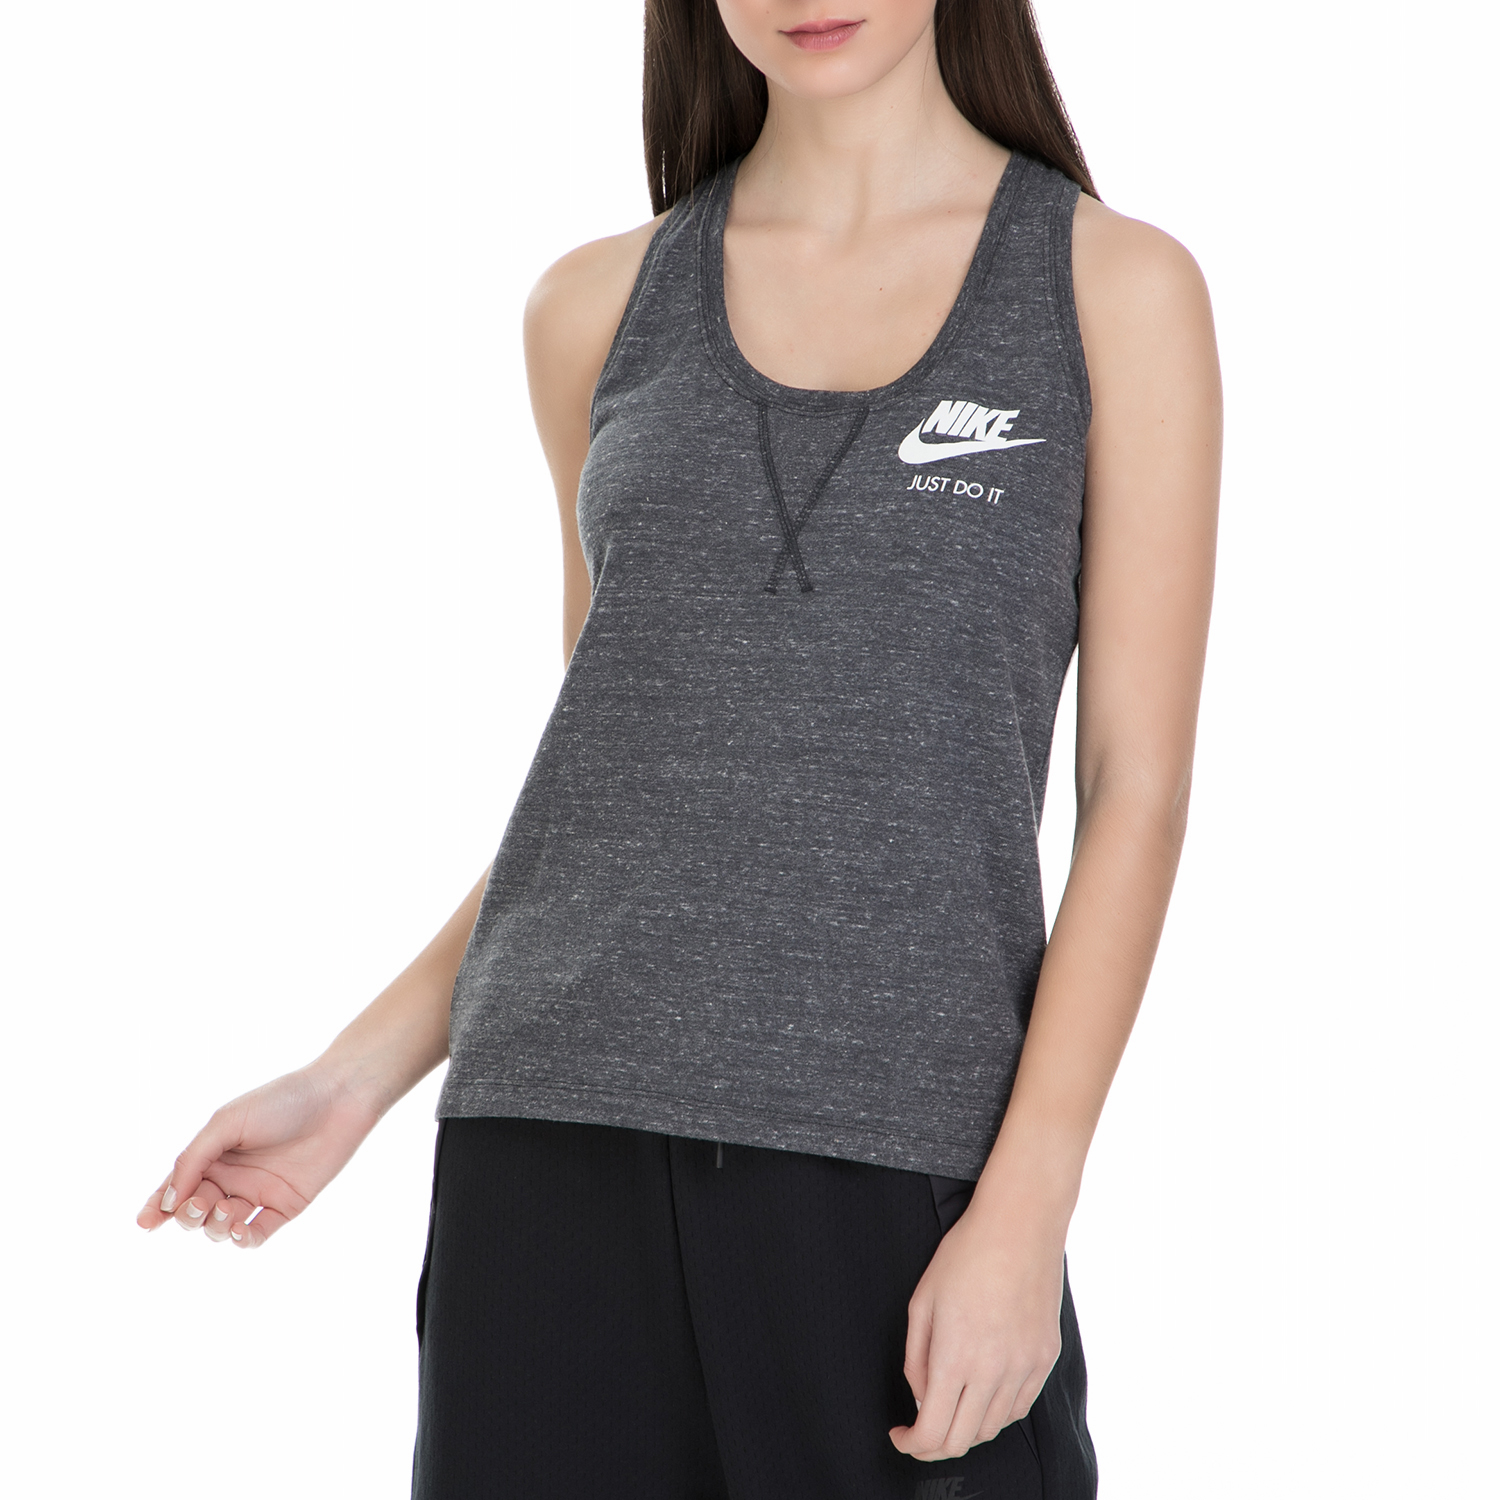 NIKE - Γυναικείο φανελάκι Nike γκρι Γυναικεία/Ρούχα/Αθλητικά/T-shirt-Τοπ